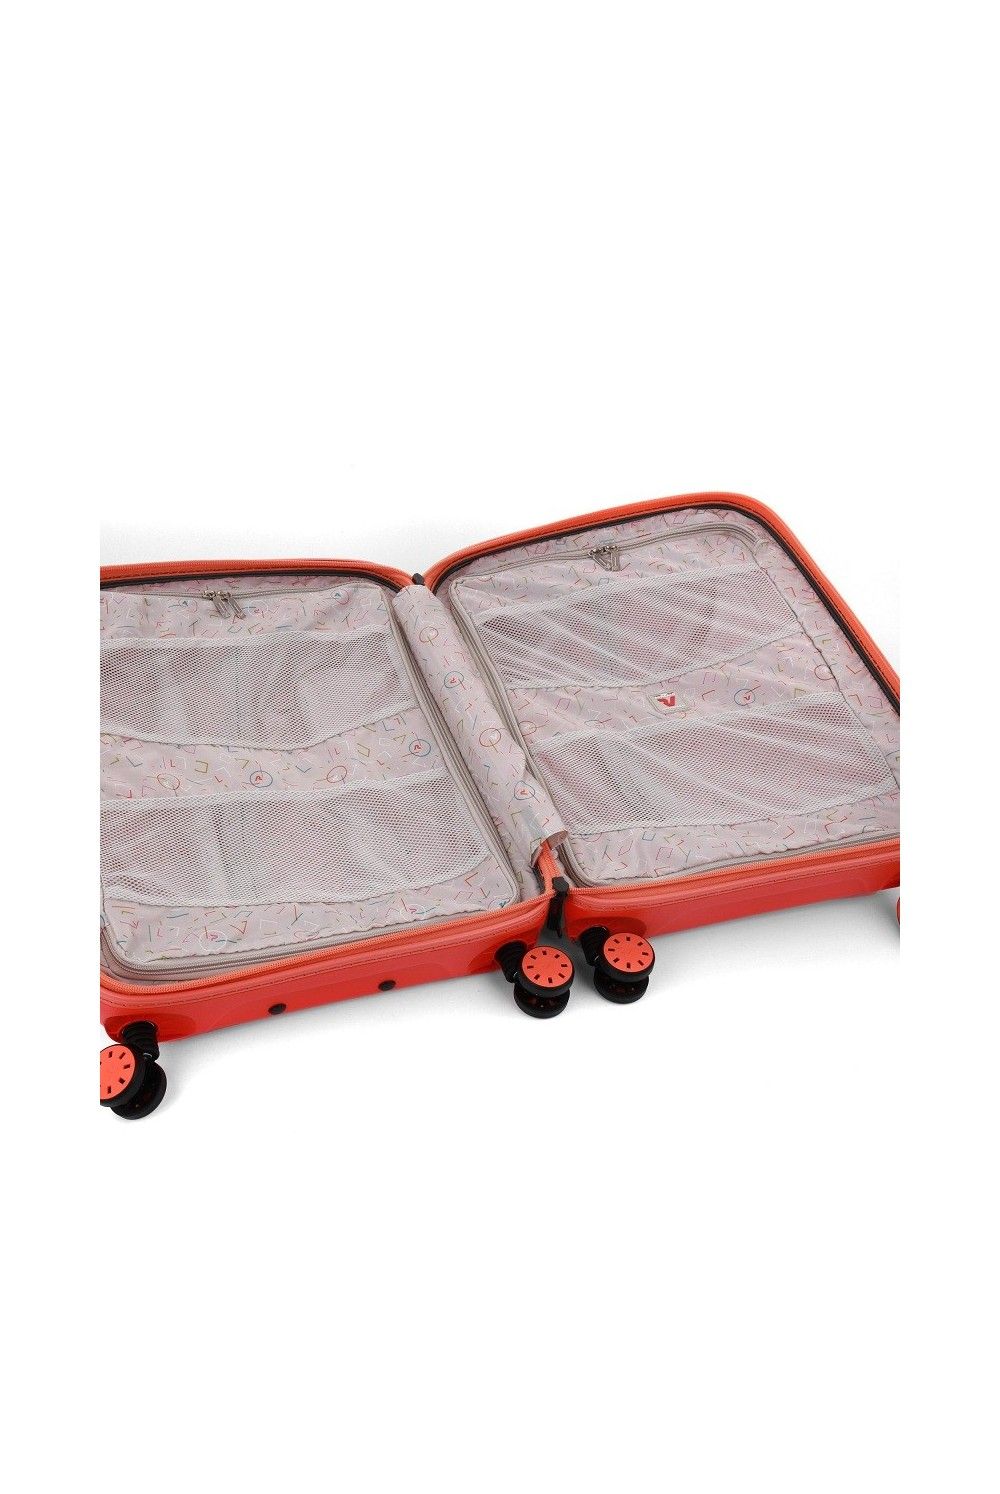 Hand luggage Roncato Box Young 55x40x20cm 4 wheels